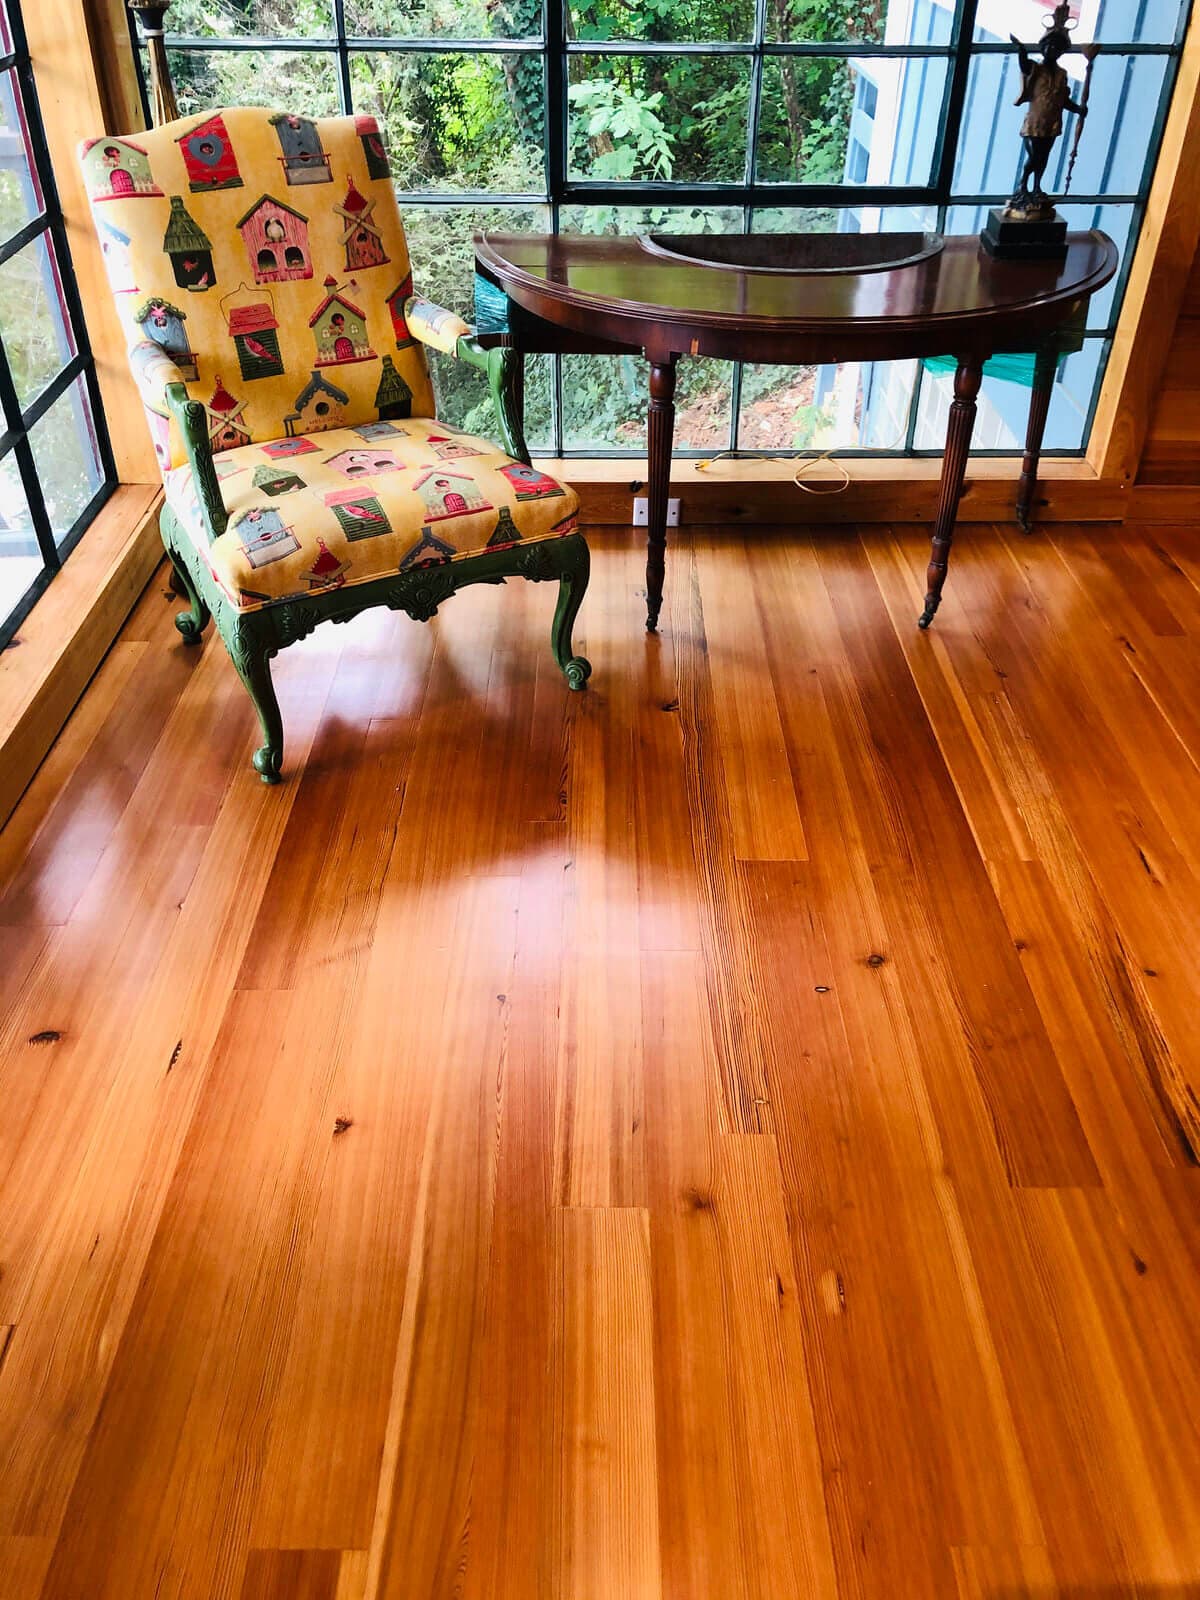 Classic old wood flooring restored to original beauty.